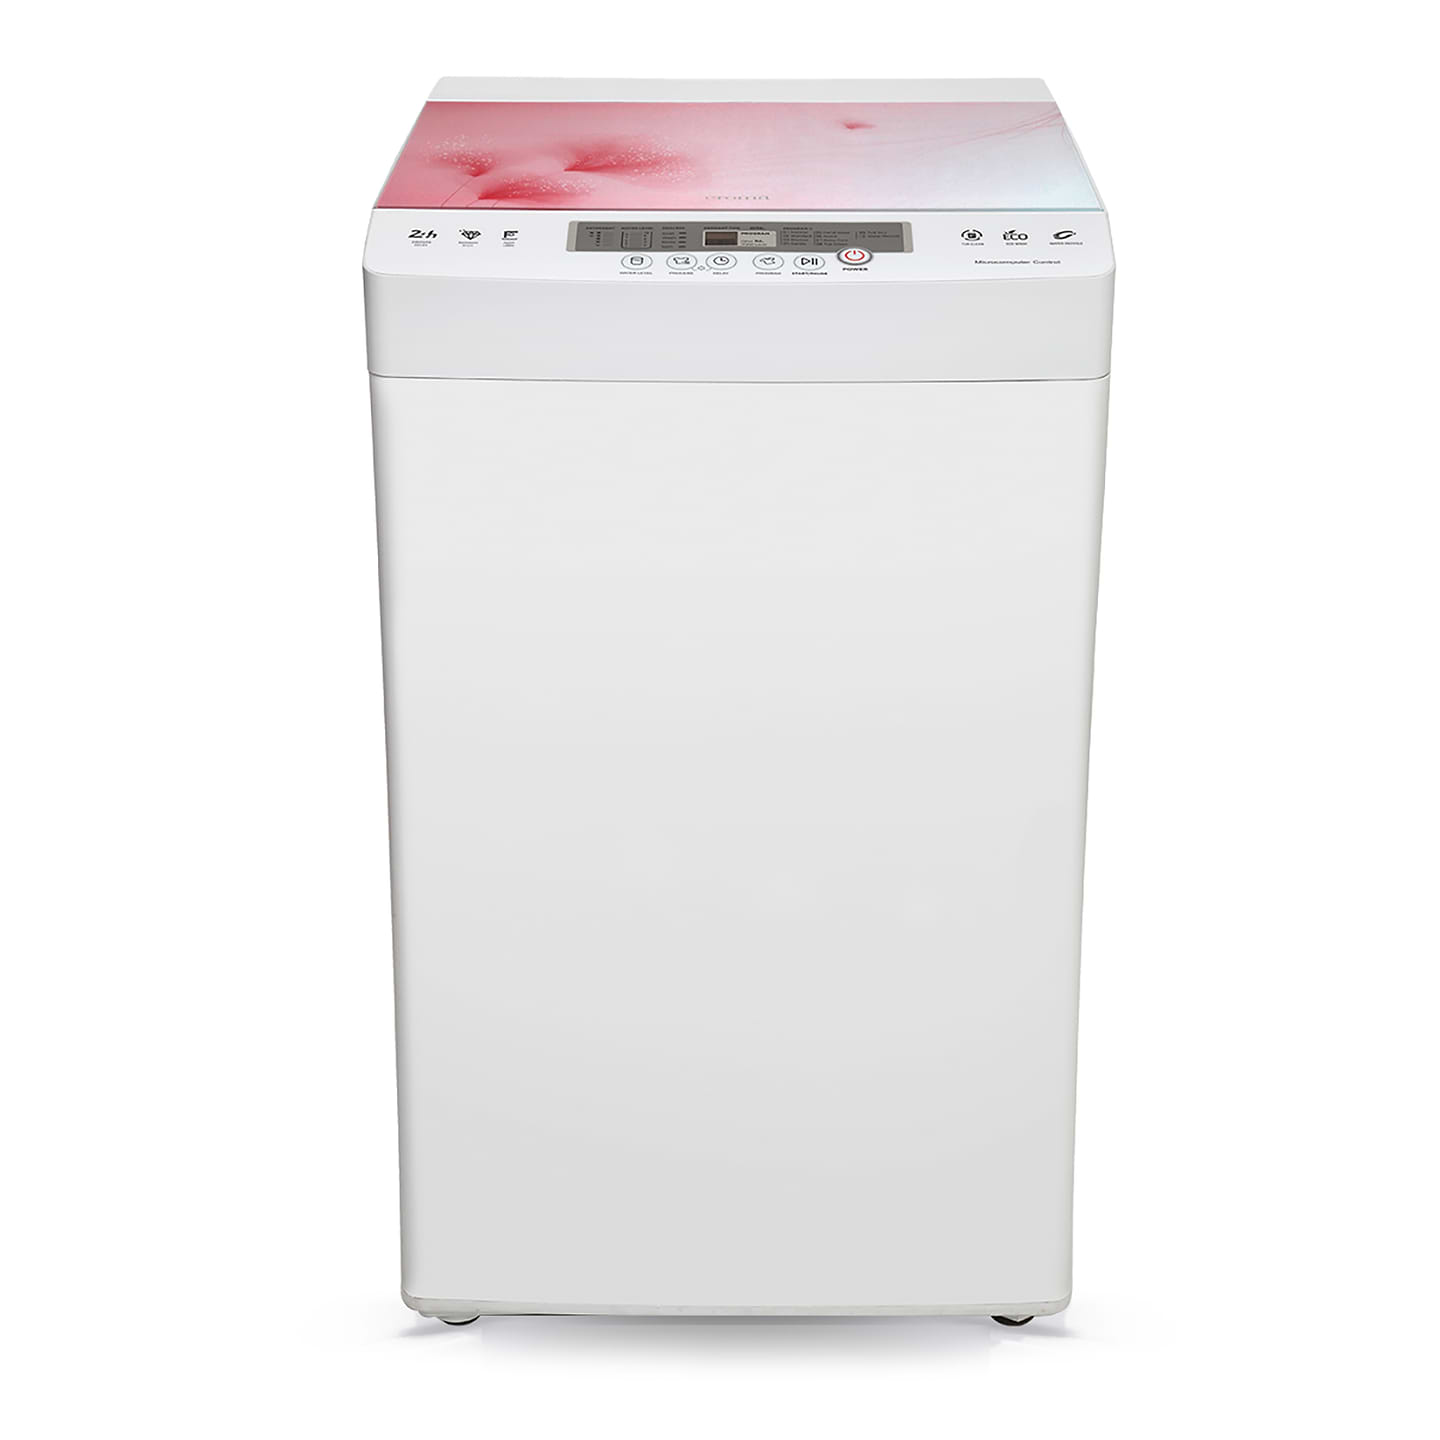 Croma 6 Kg Fully Automatic Top Loading Washing Machine (CRAW1300, White)